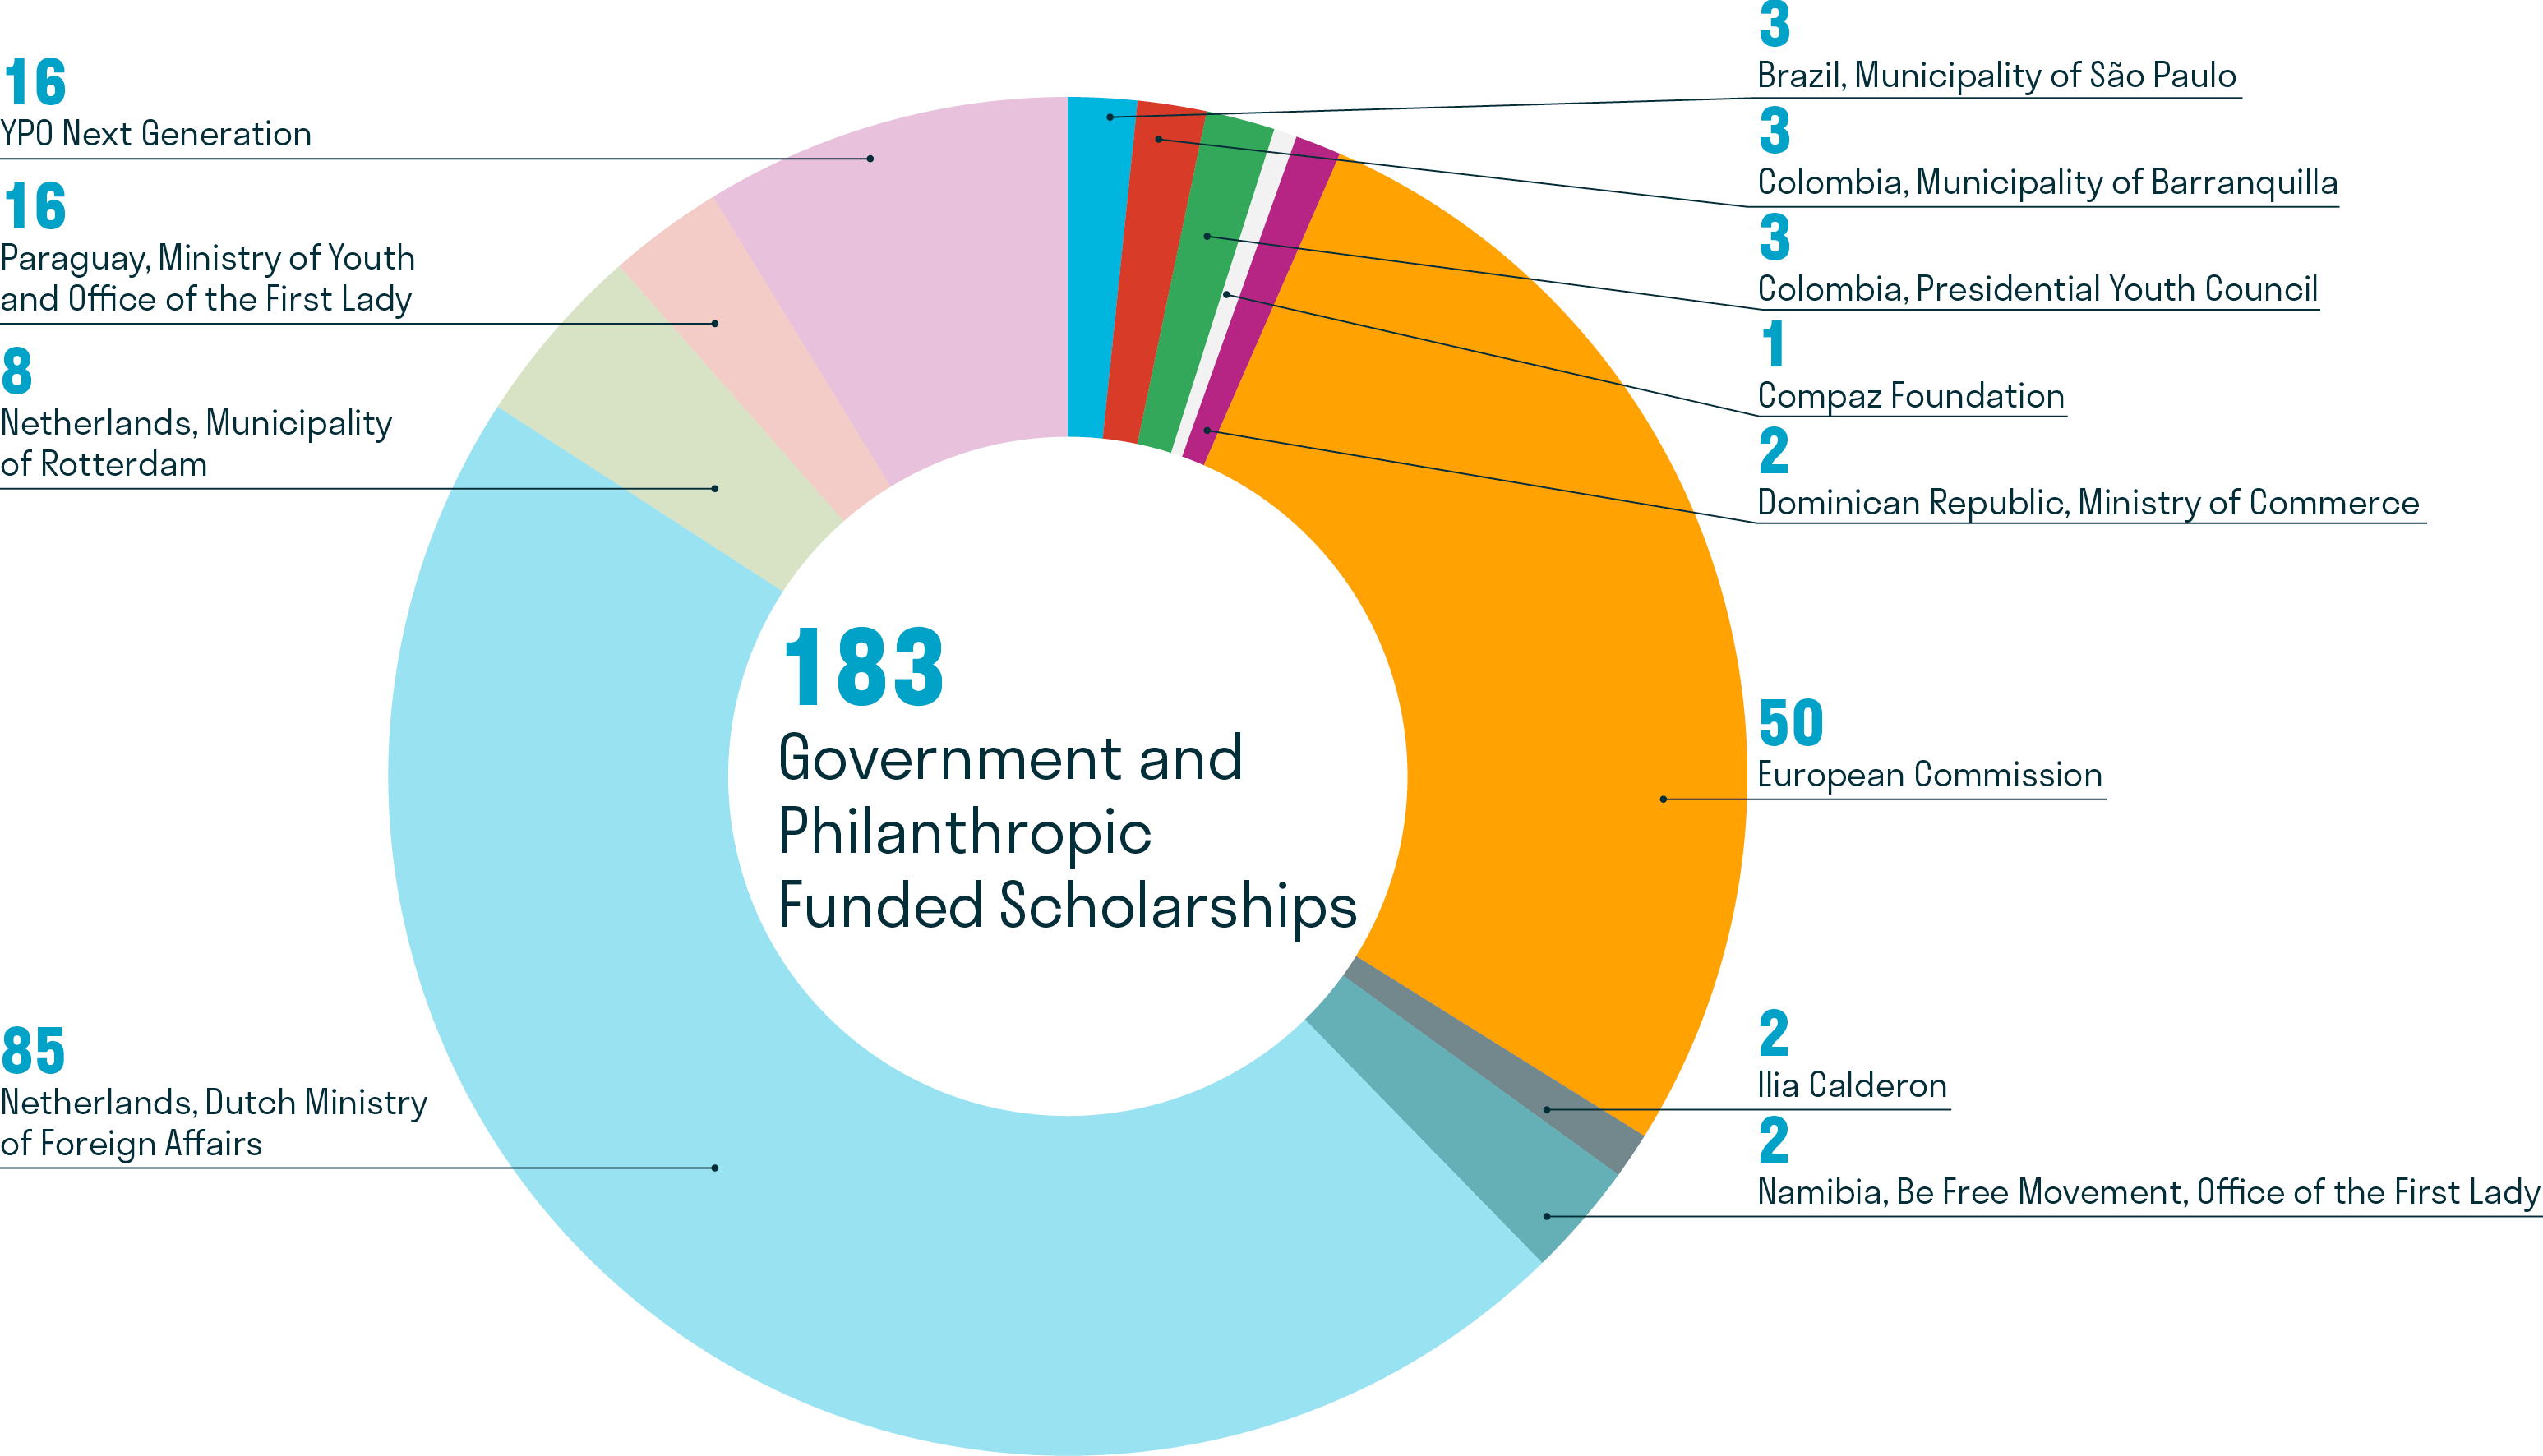 Programmes funded scholarships